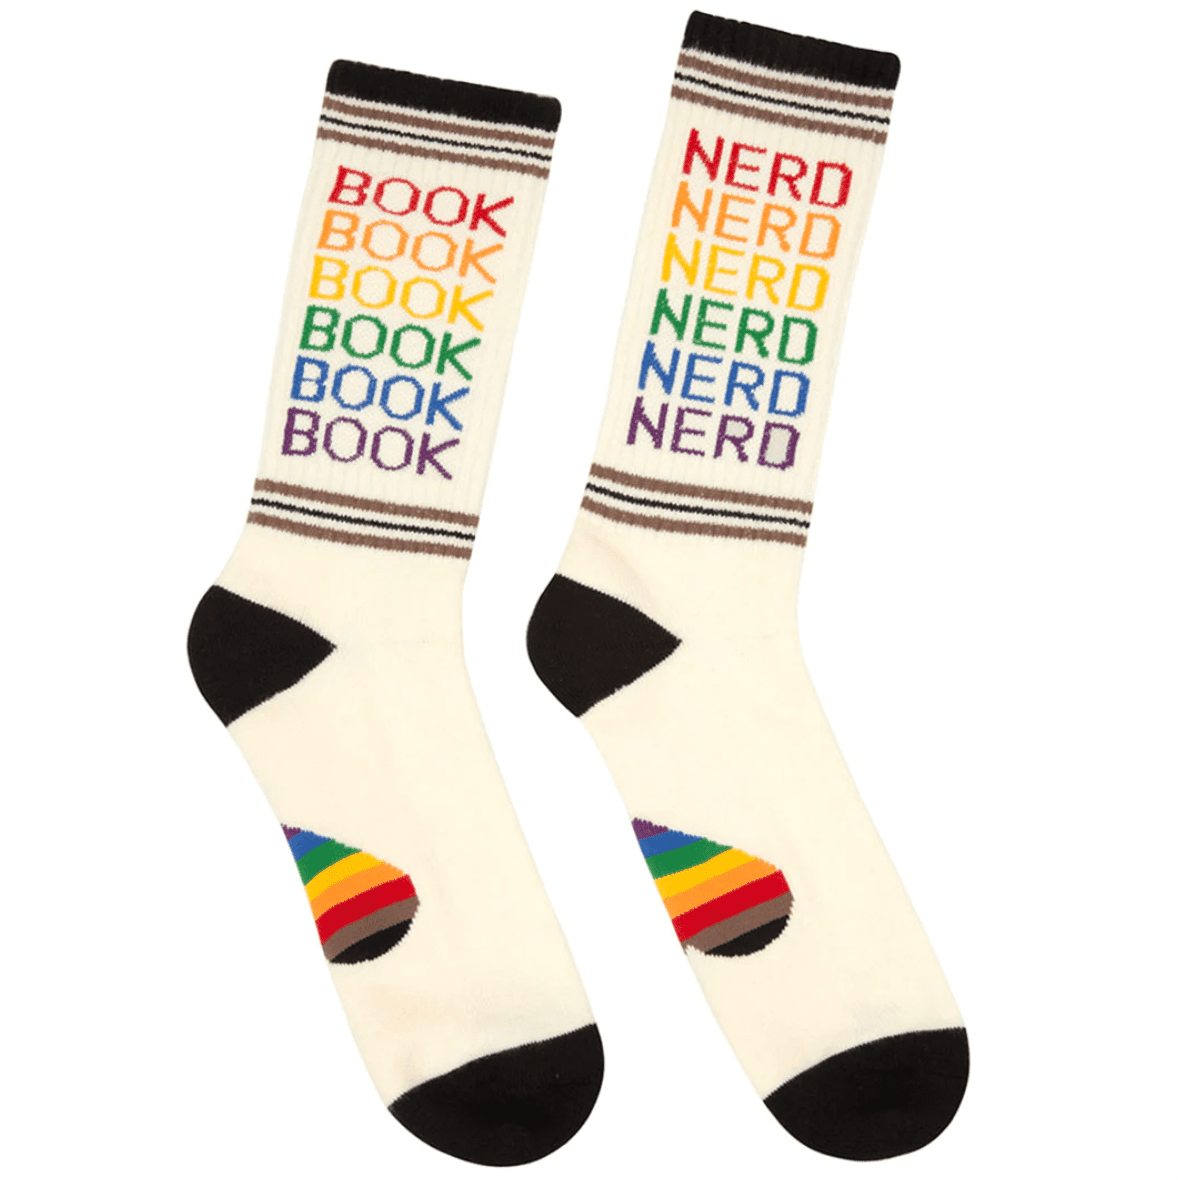 Socks that say book nerd in rainbow colors